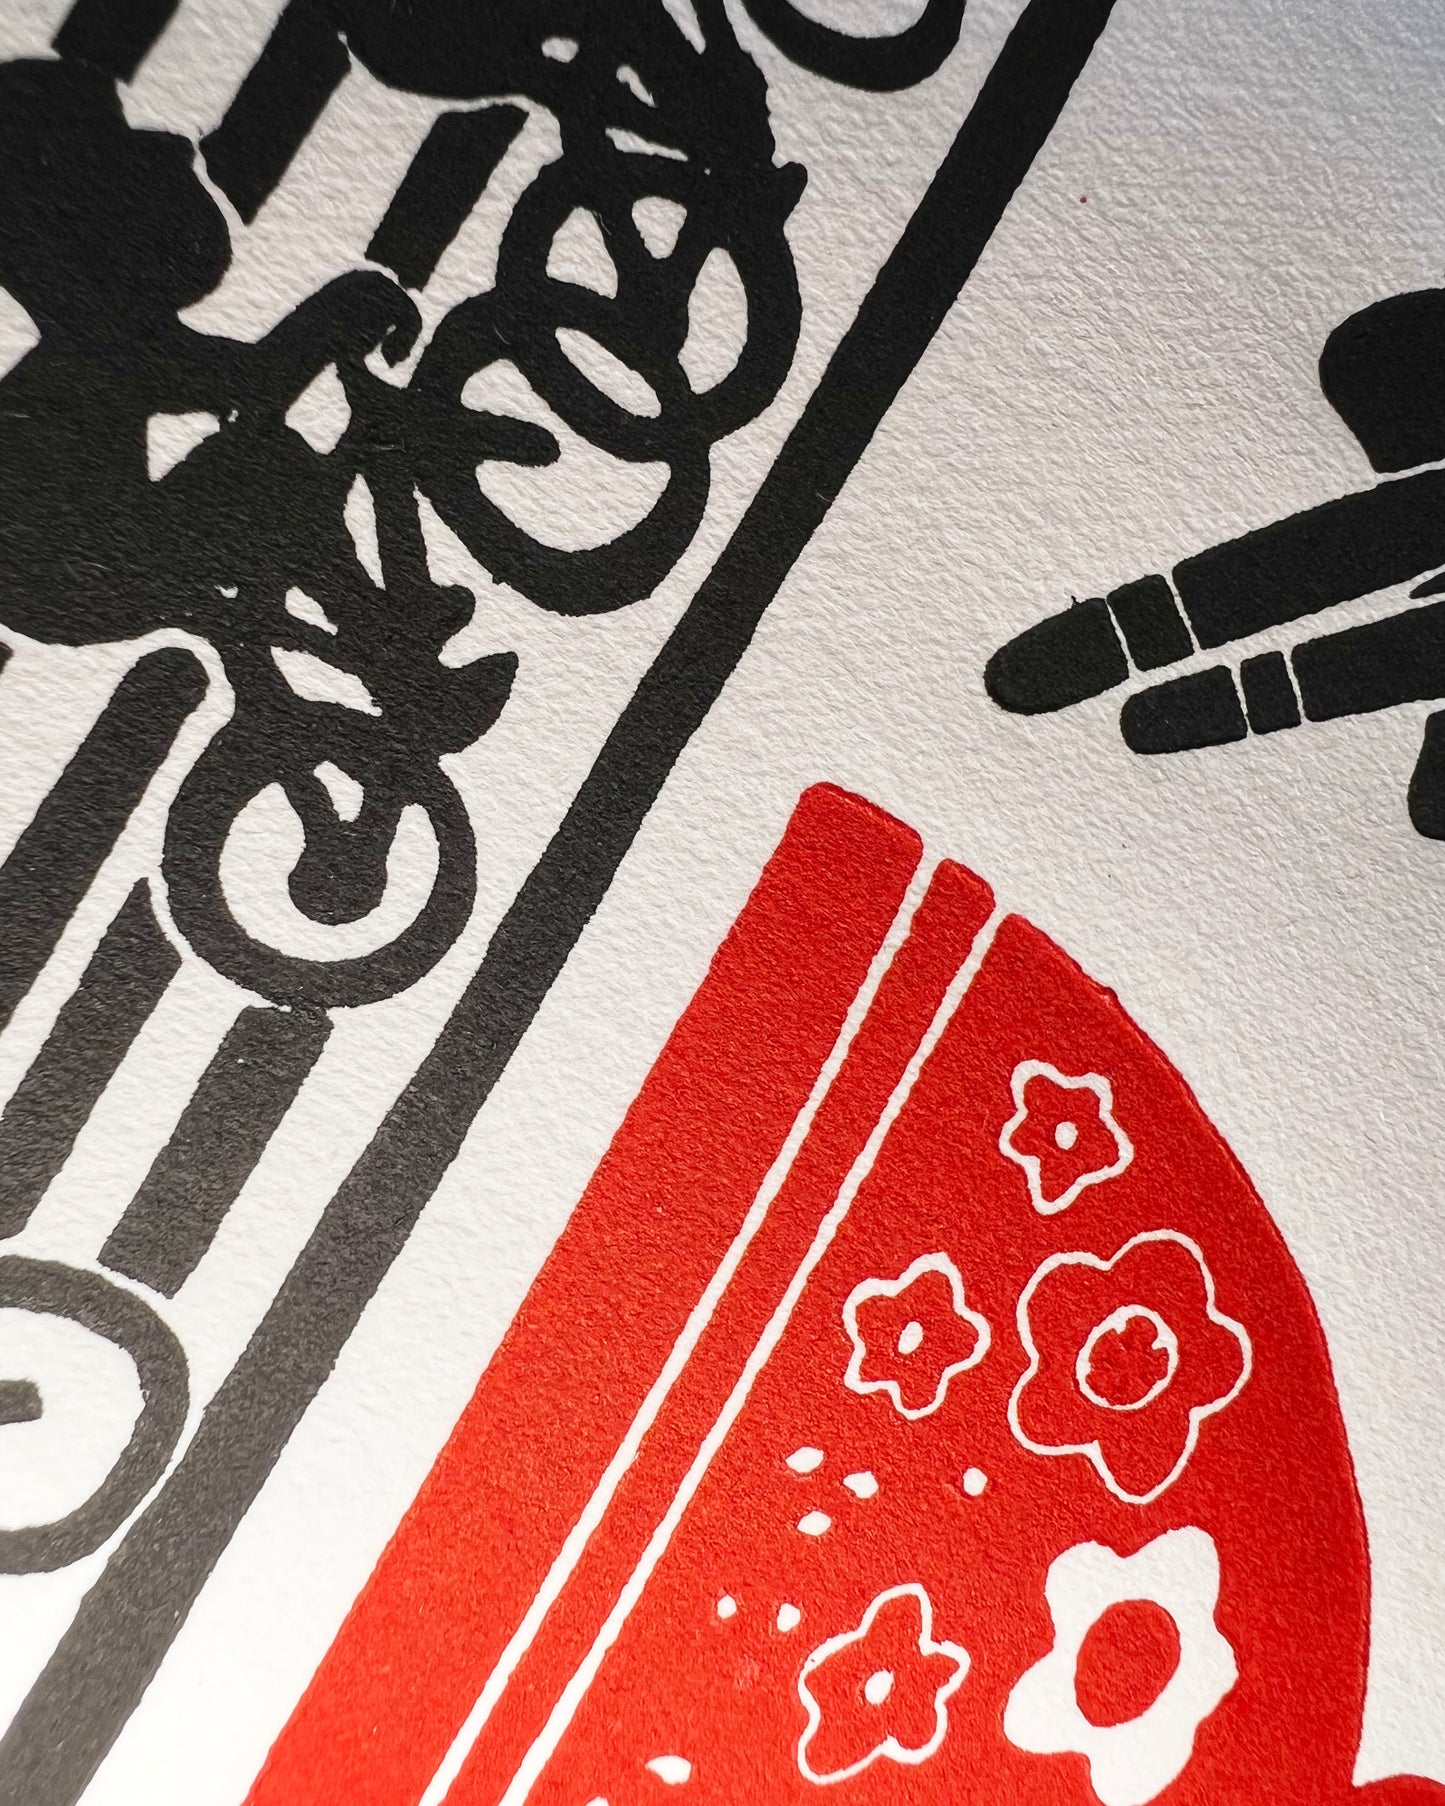 Cycling Handmade Linocut Art Print - Ride to Ramen